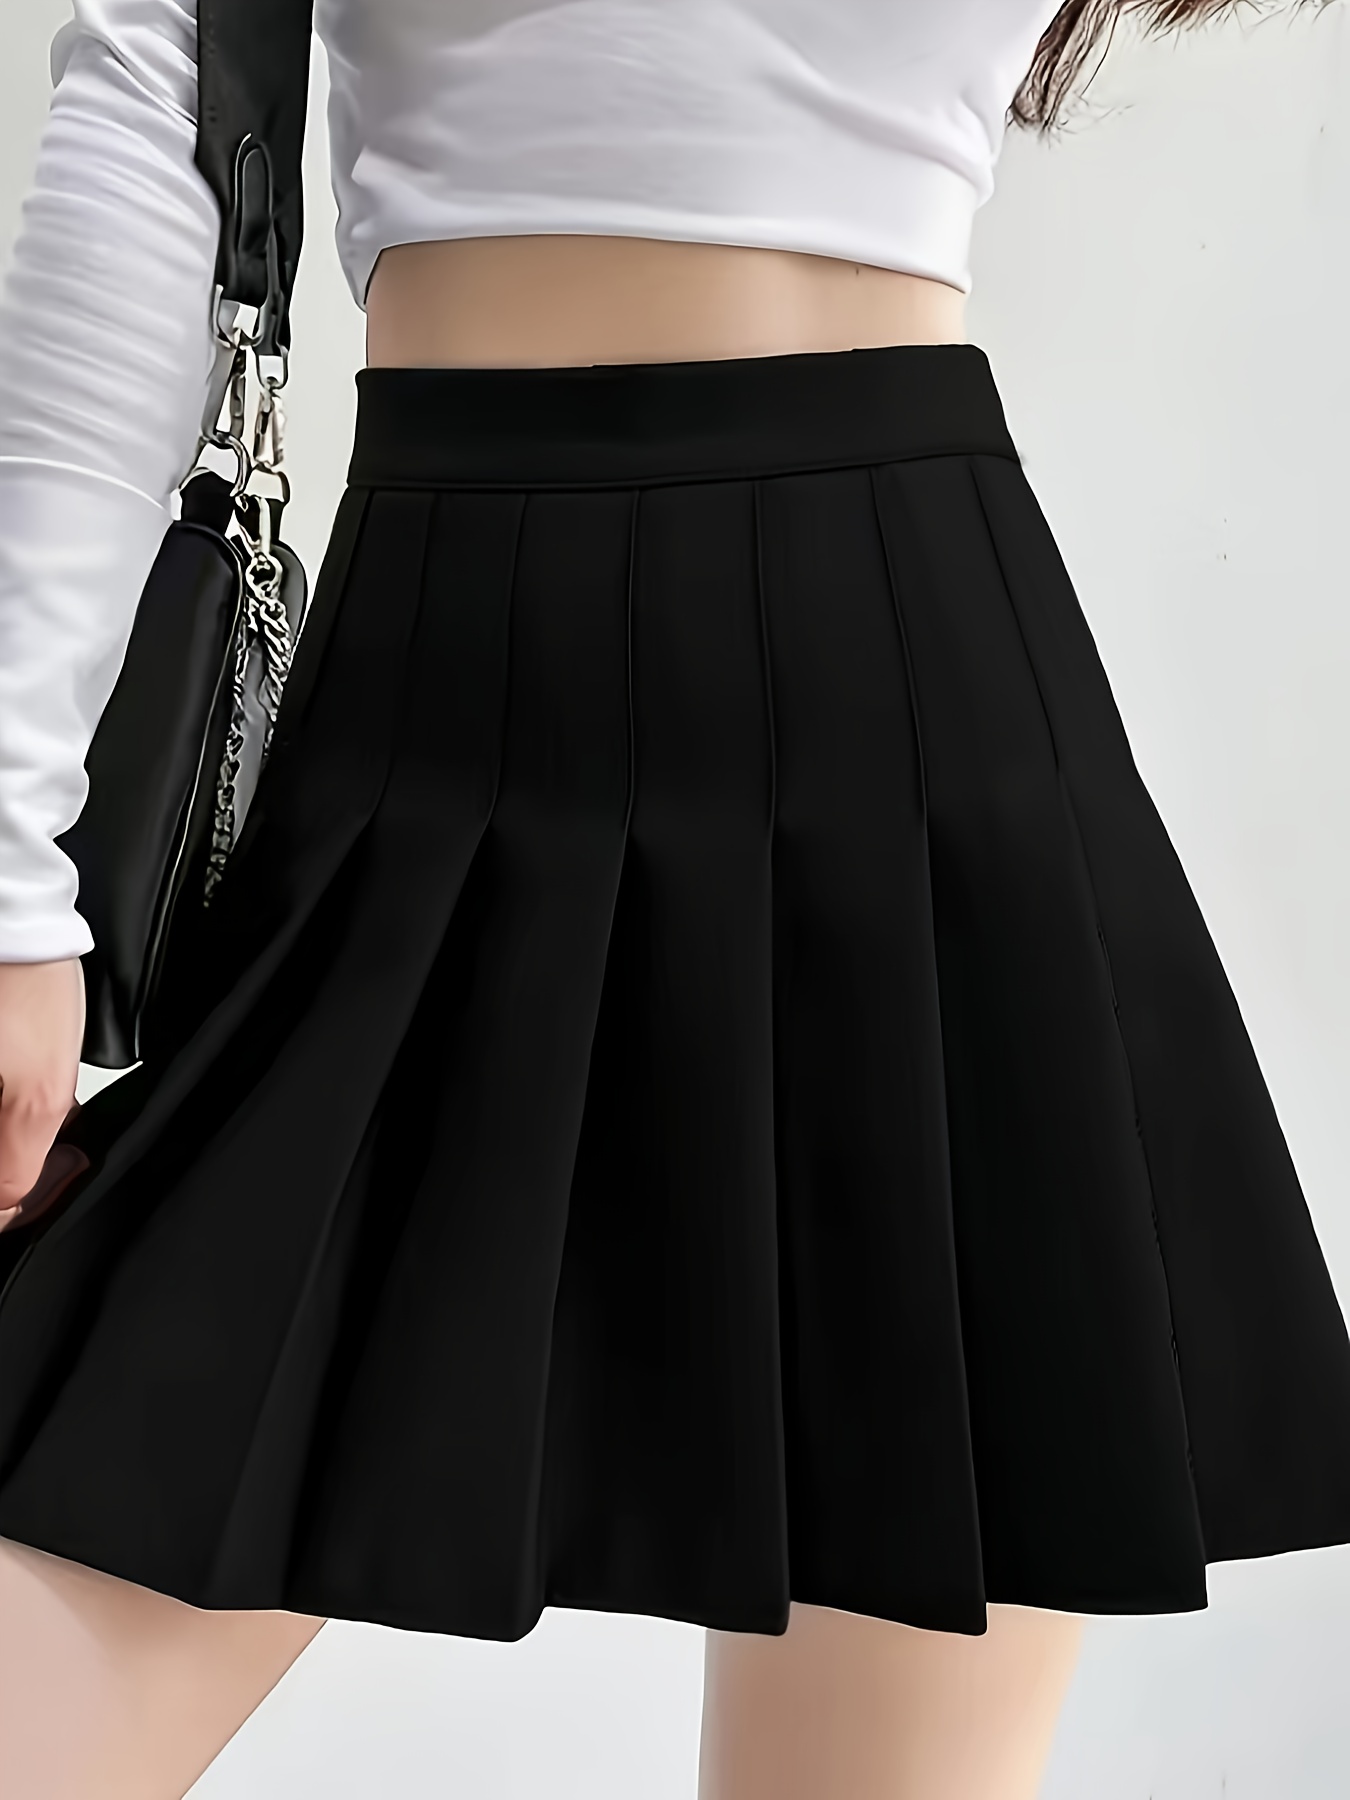 Mini Falda Negra Con Vuelo Y Transparencia Moda Sexy Corta R